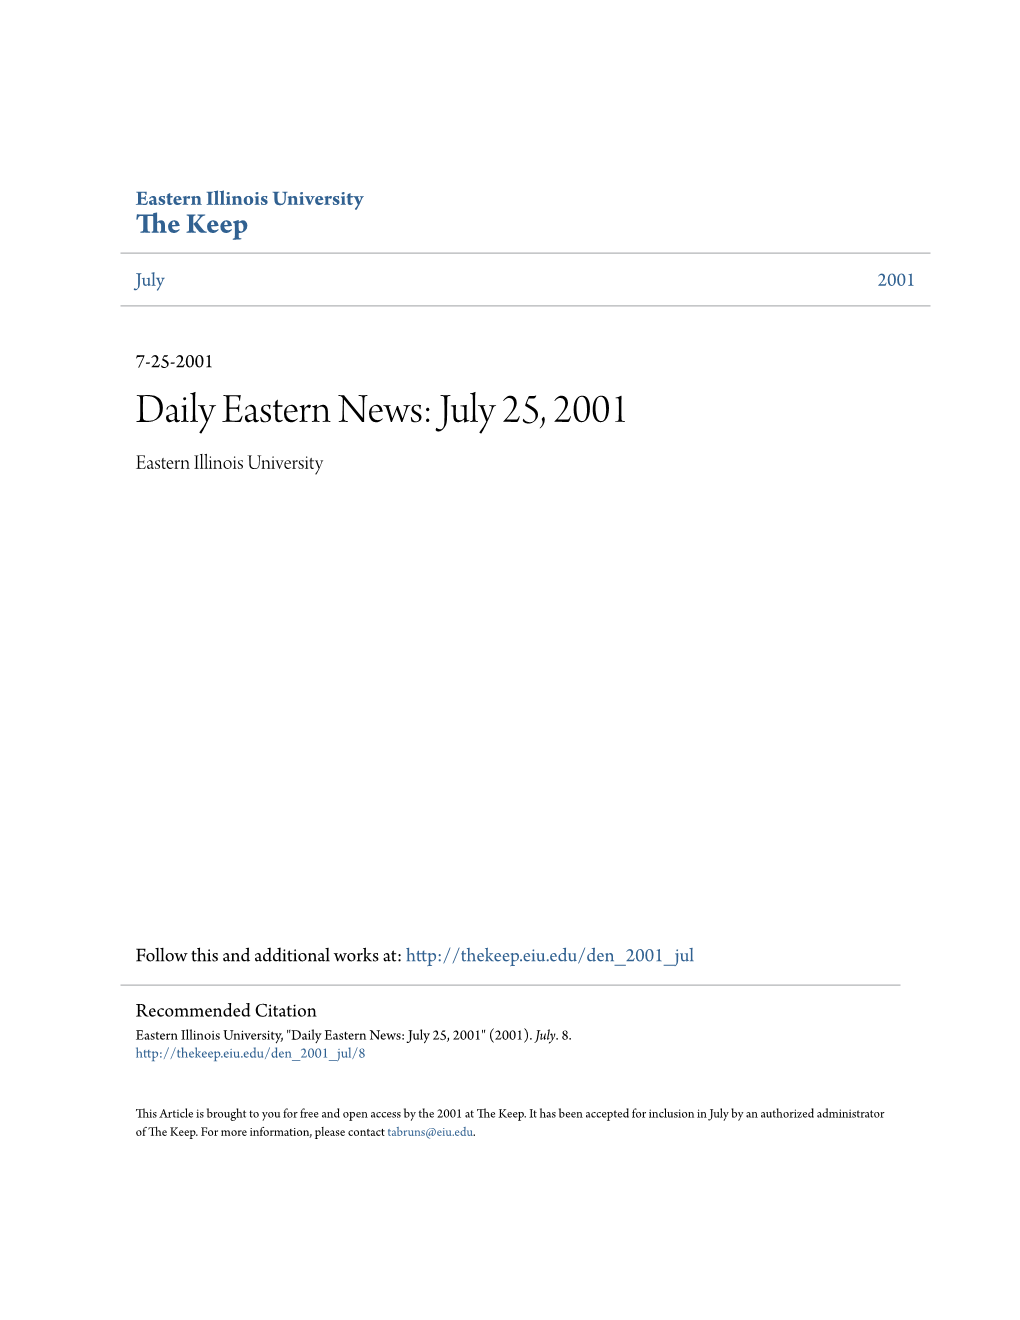 Daily Eastern News: July 25, 2001 Eastern Illinois University